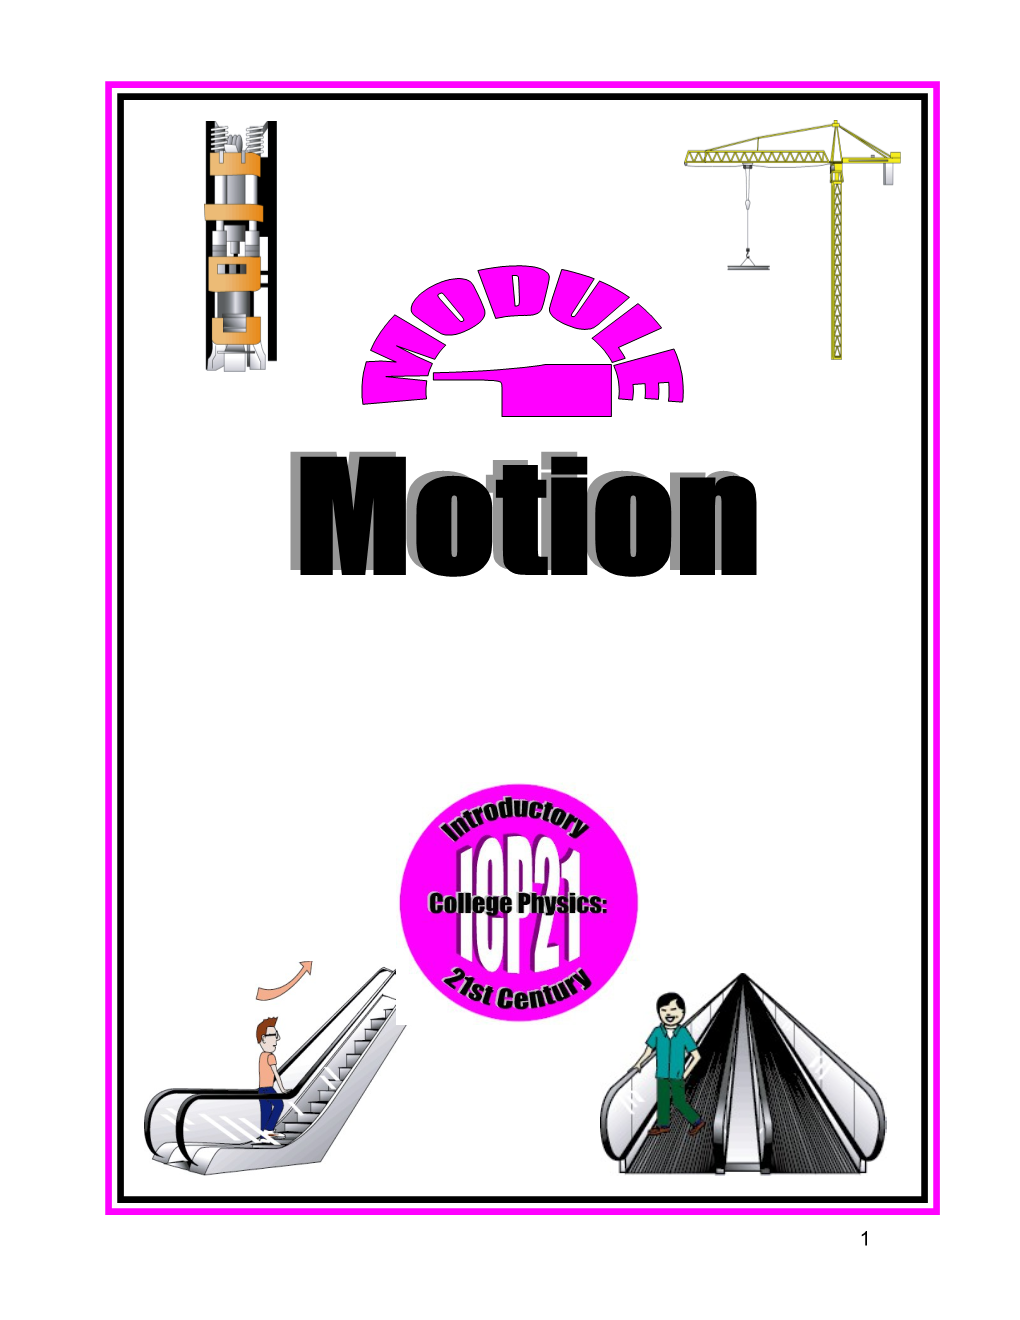 Motion Diagrams